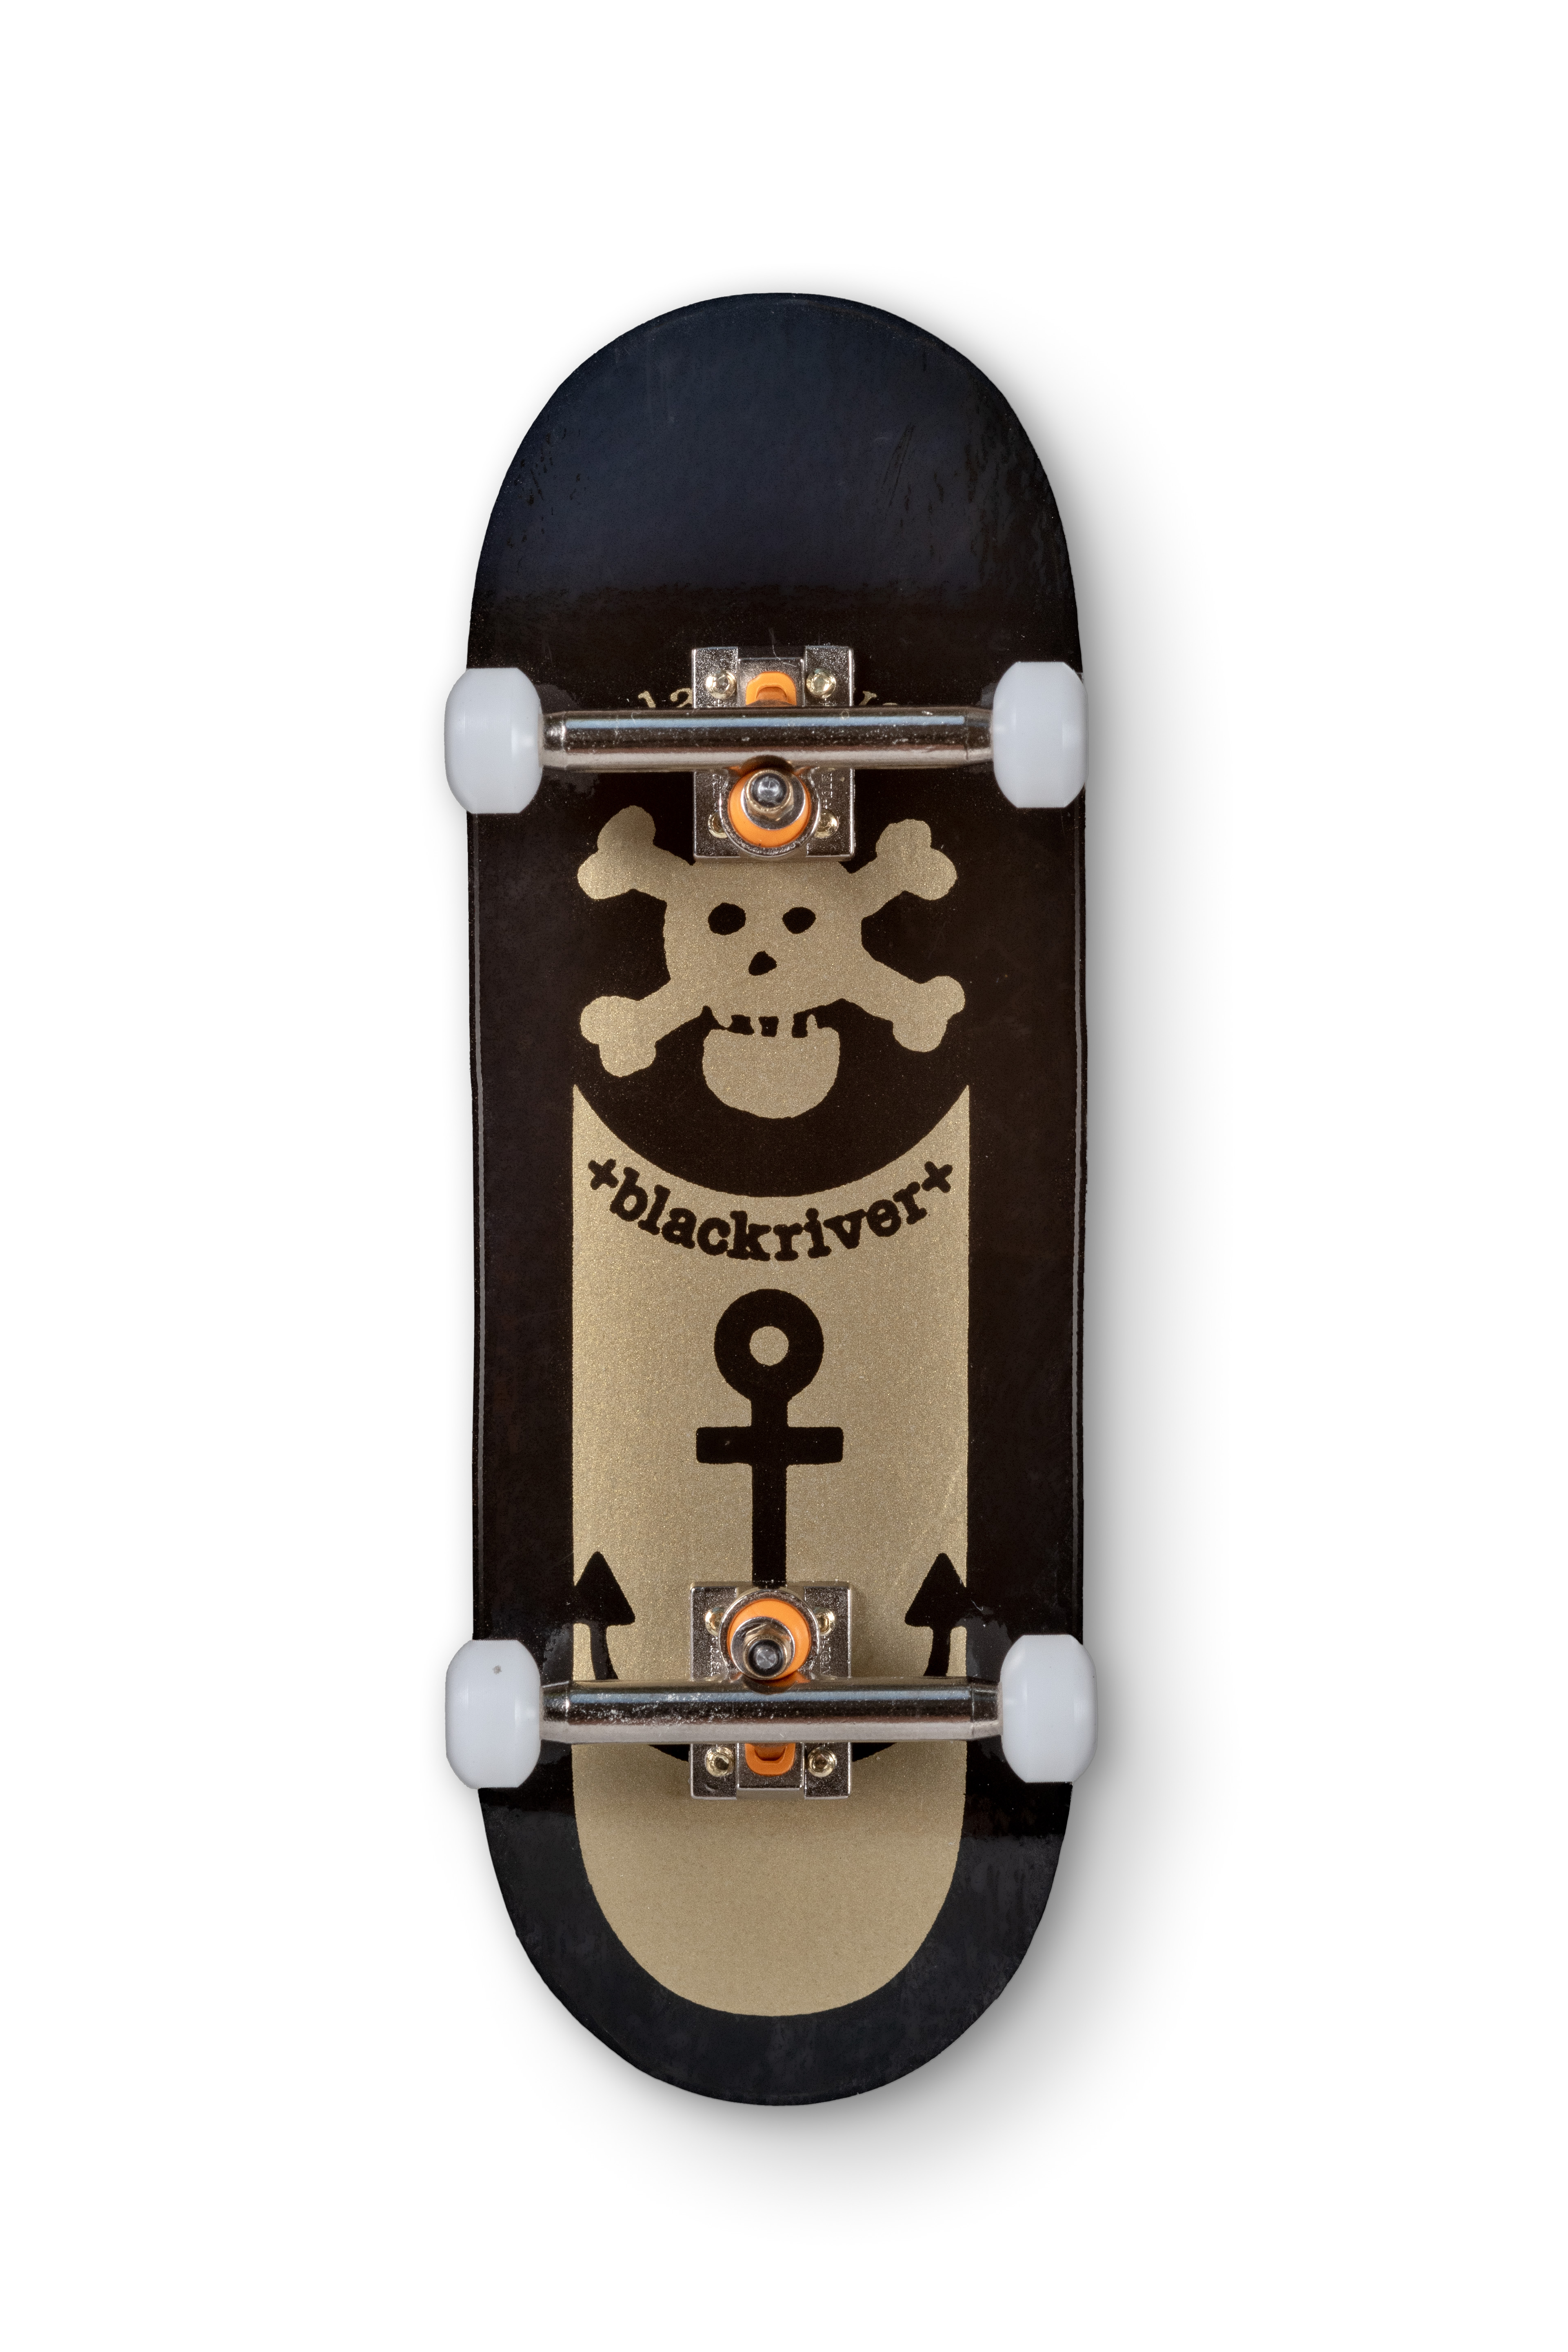 Tricks Fingerboards Fingerskateboard Skateboard-Designs und Zubehör 